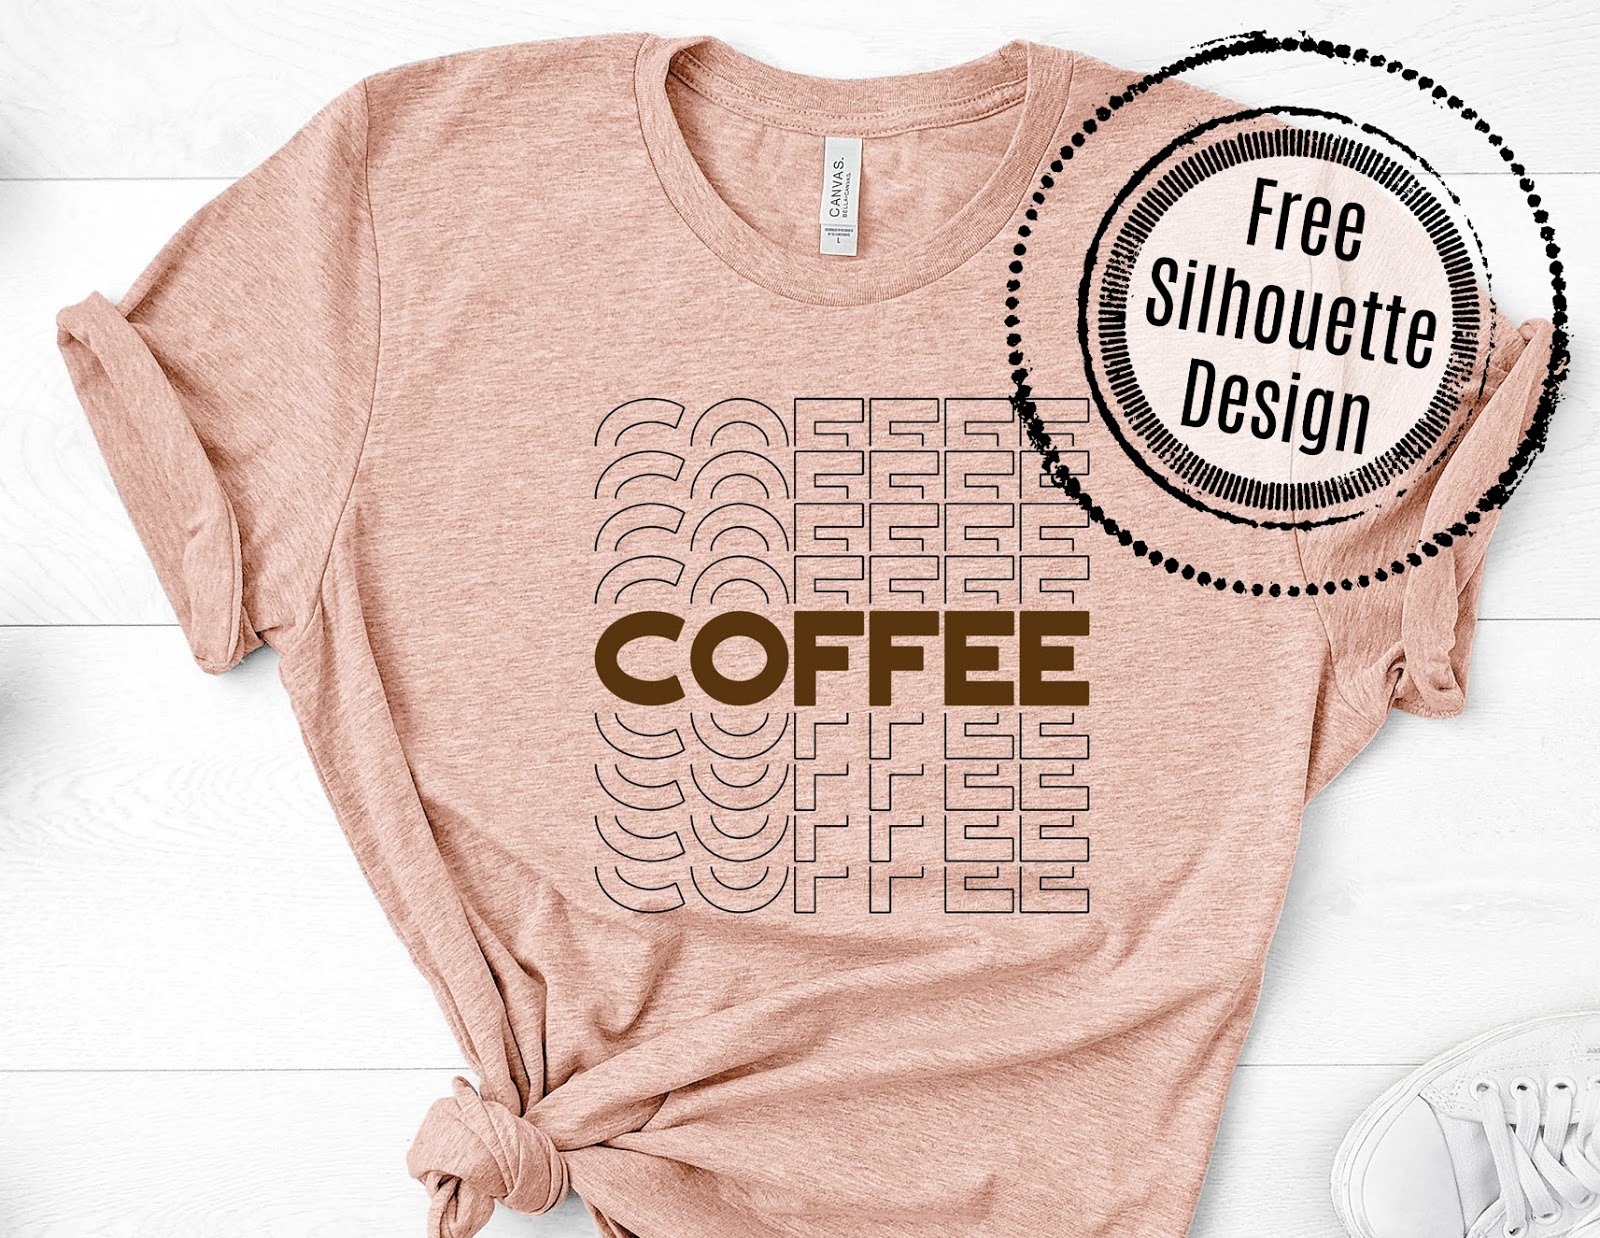 Download Free Silhouette Design: Mirror Word Coffee - Silhouette School